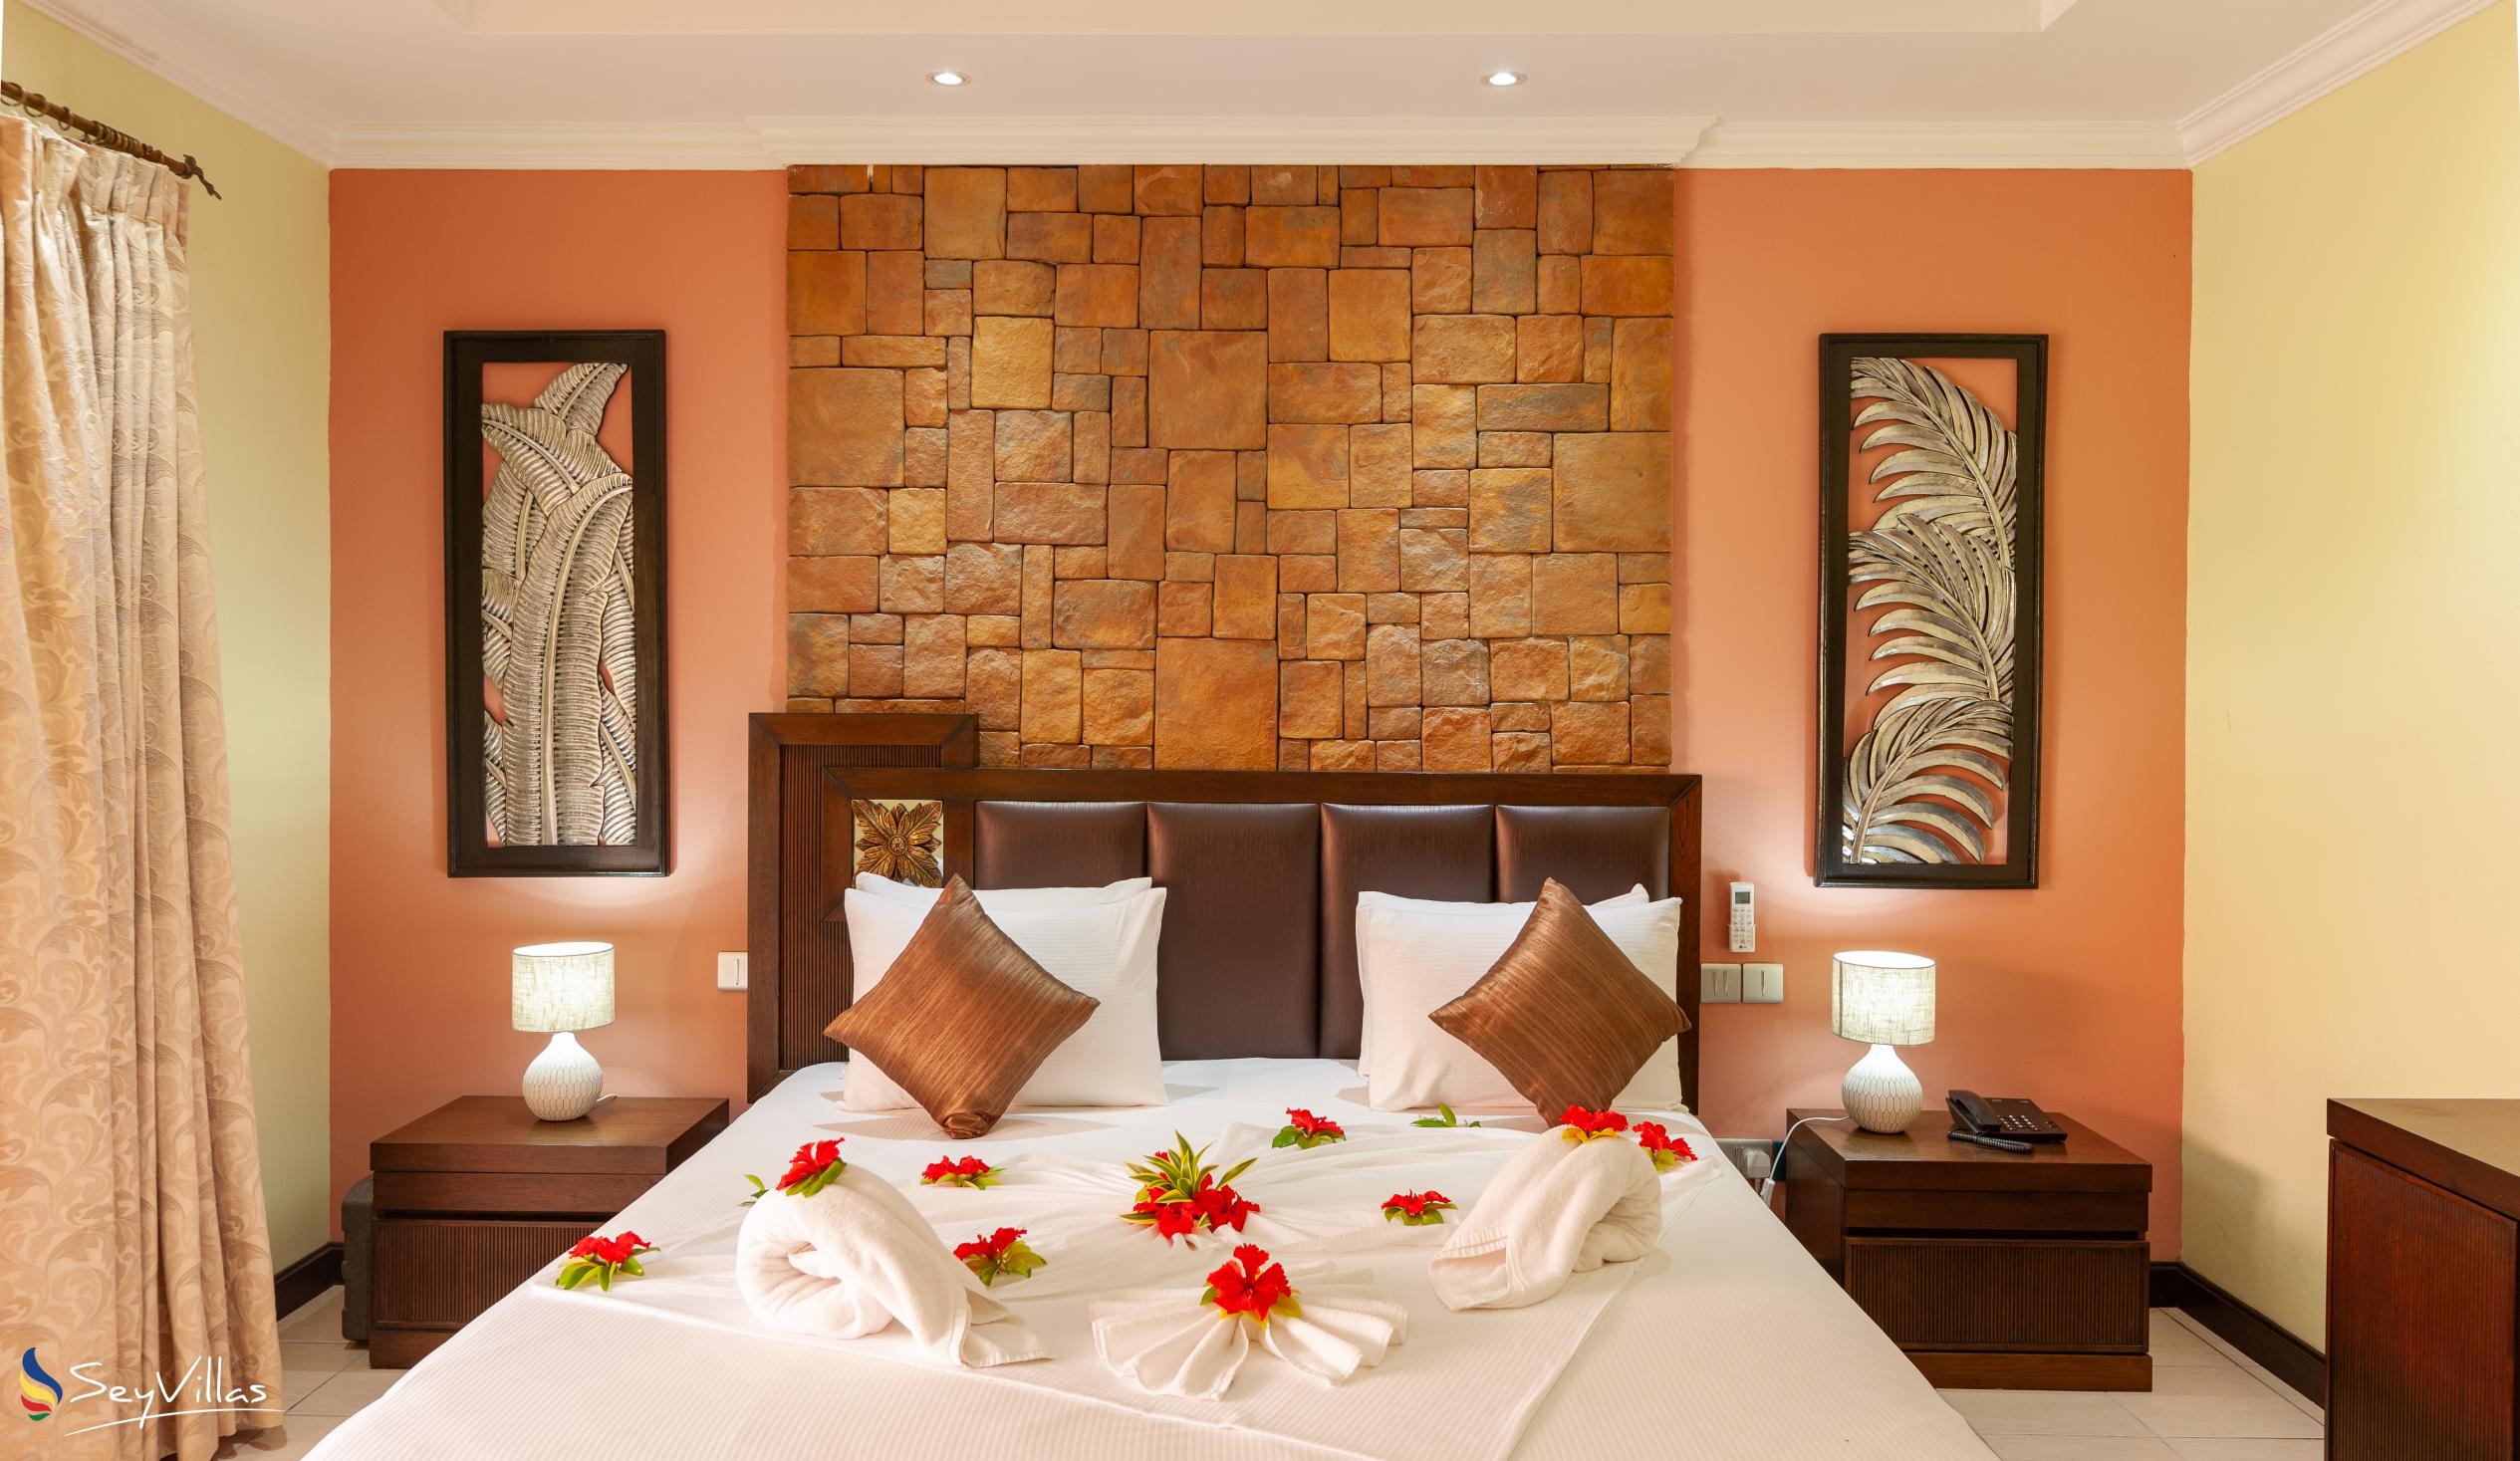 Photo 32: Oasis Hotel, Restaurant & Spa - Standard Room - Praslin (Seychelles)